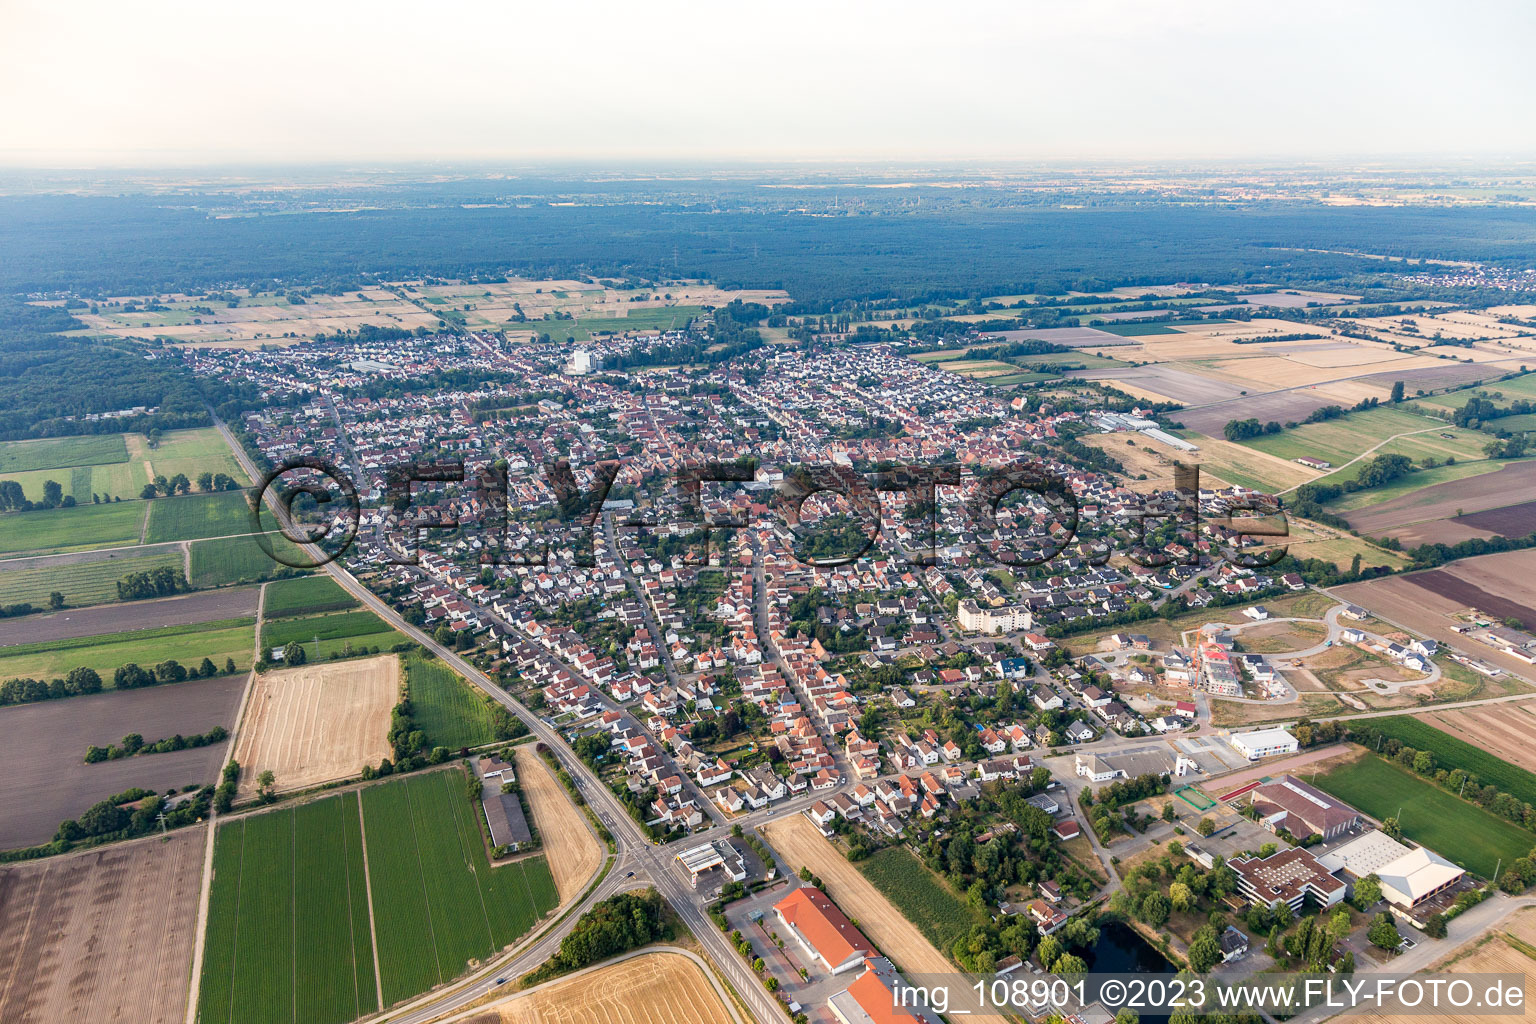 Aerial view of District Iggelheim in Böhl-Iggelheim in the state Rhineland-Palatinate, Germany